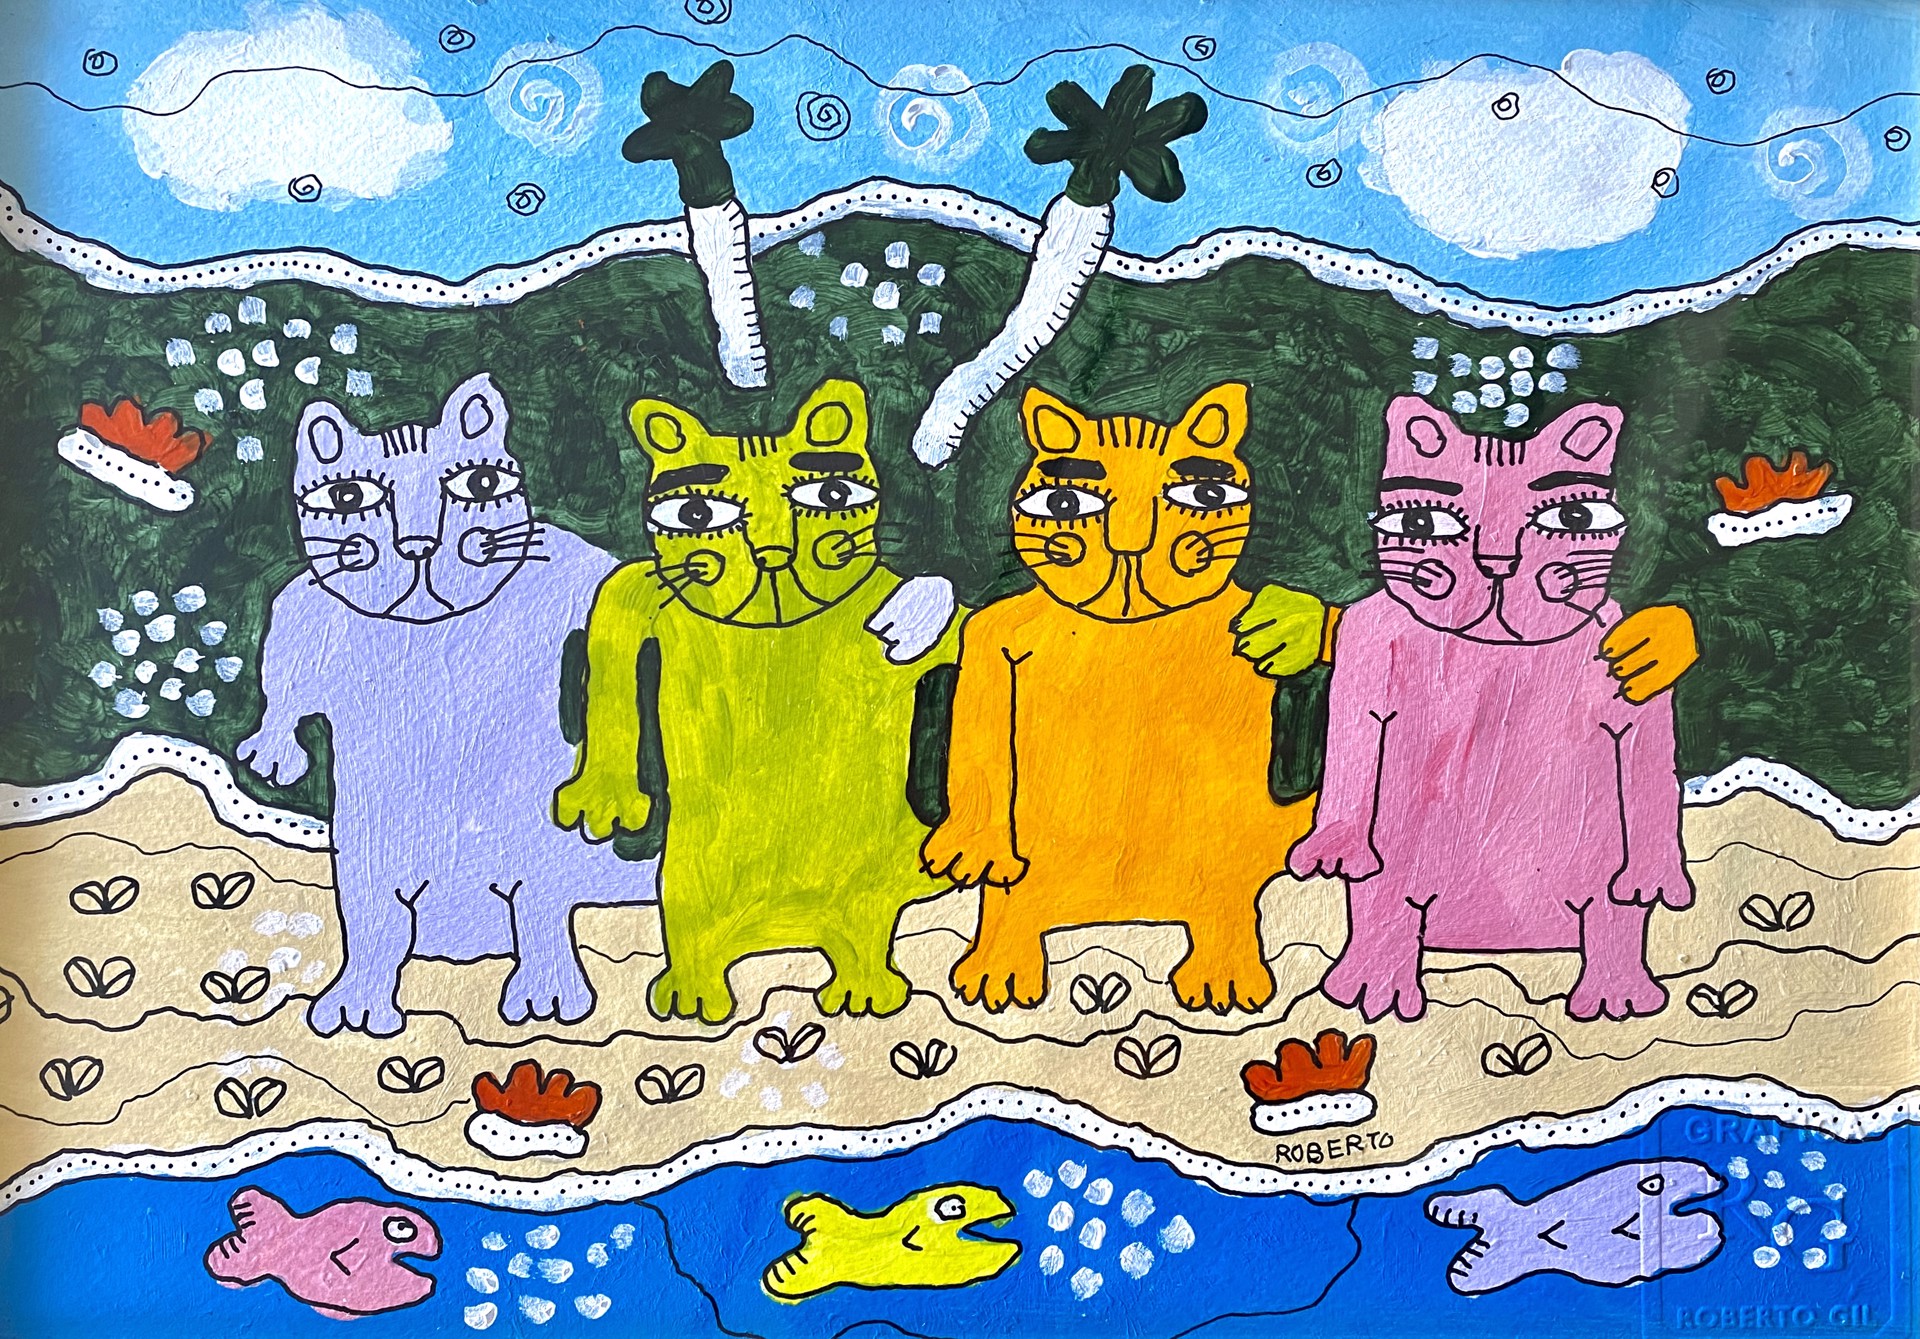 Four Cats by Roberto Domingo Gil Esteban